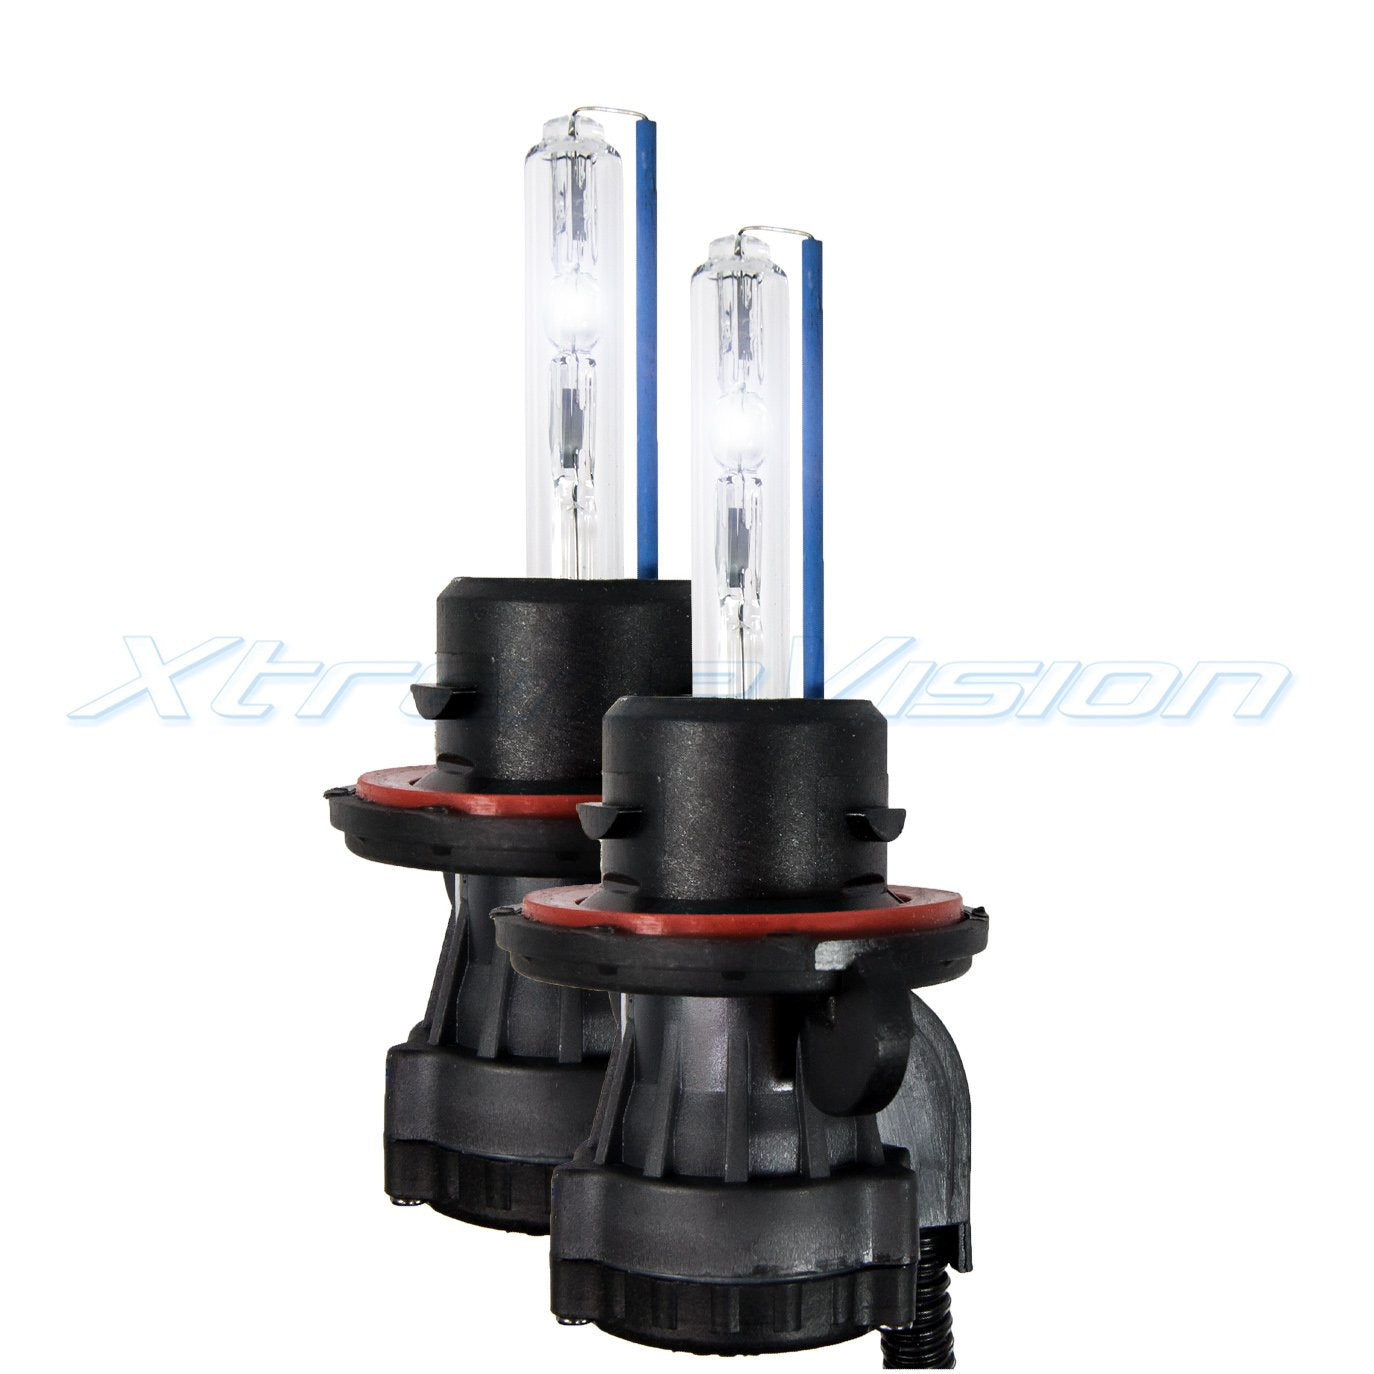 XtremeVision HID Xenon Replacement Bulbs - Bi-Xenon H13 4300K - Bright White (1 Pair) - 2 Year Warranty